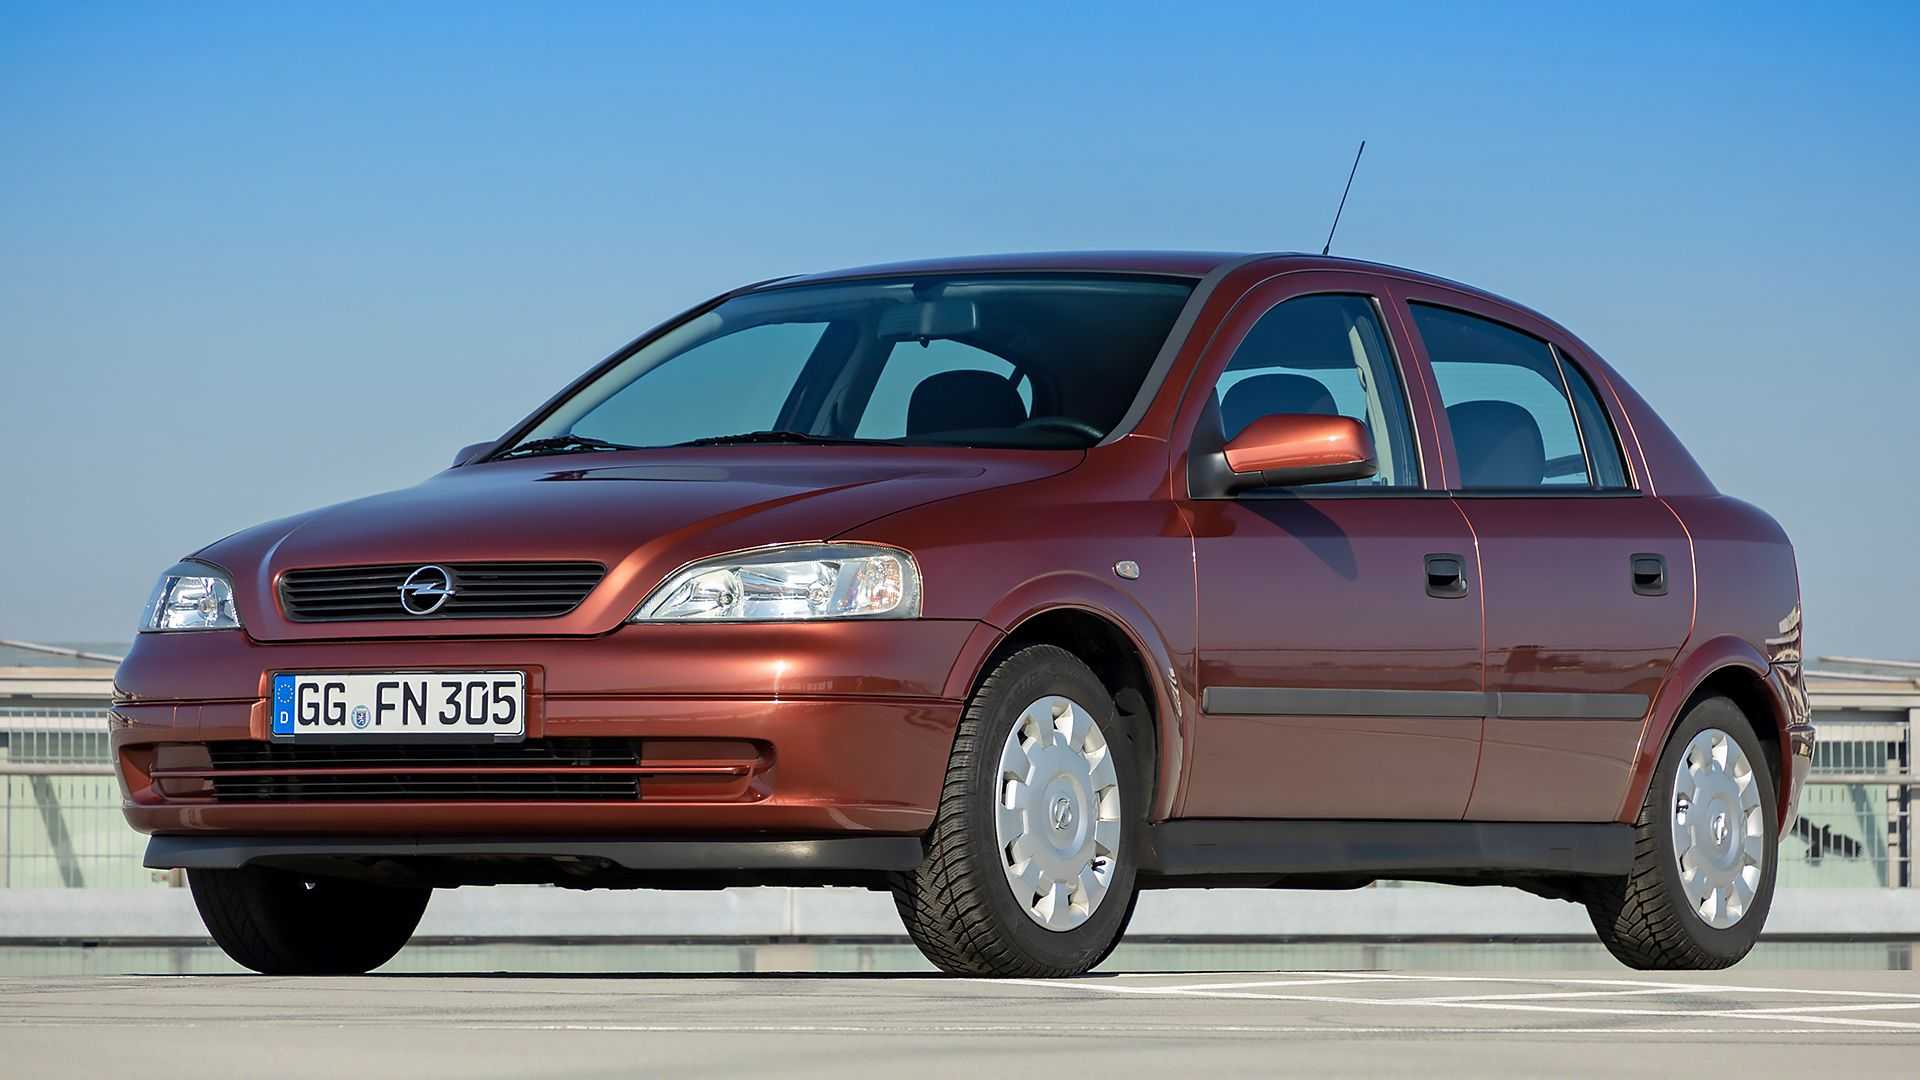 Opel Astra G (1998-2005)